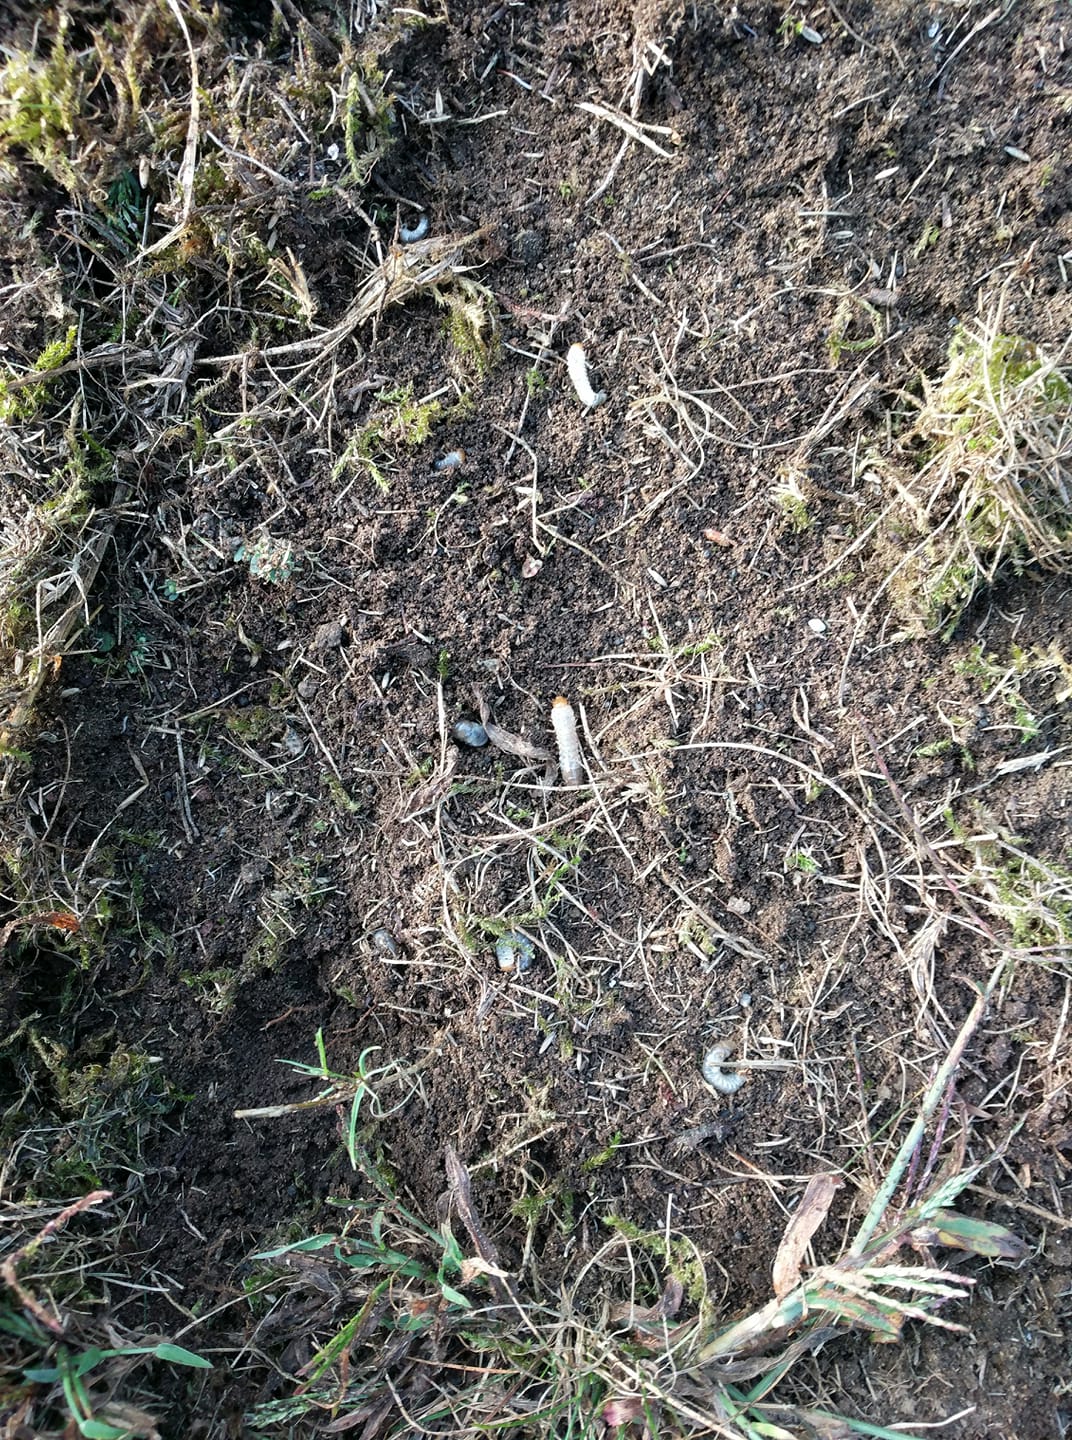 White lawn grubs worms